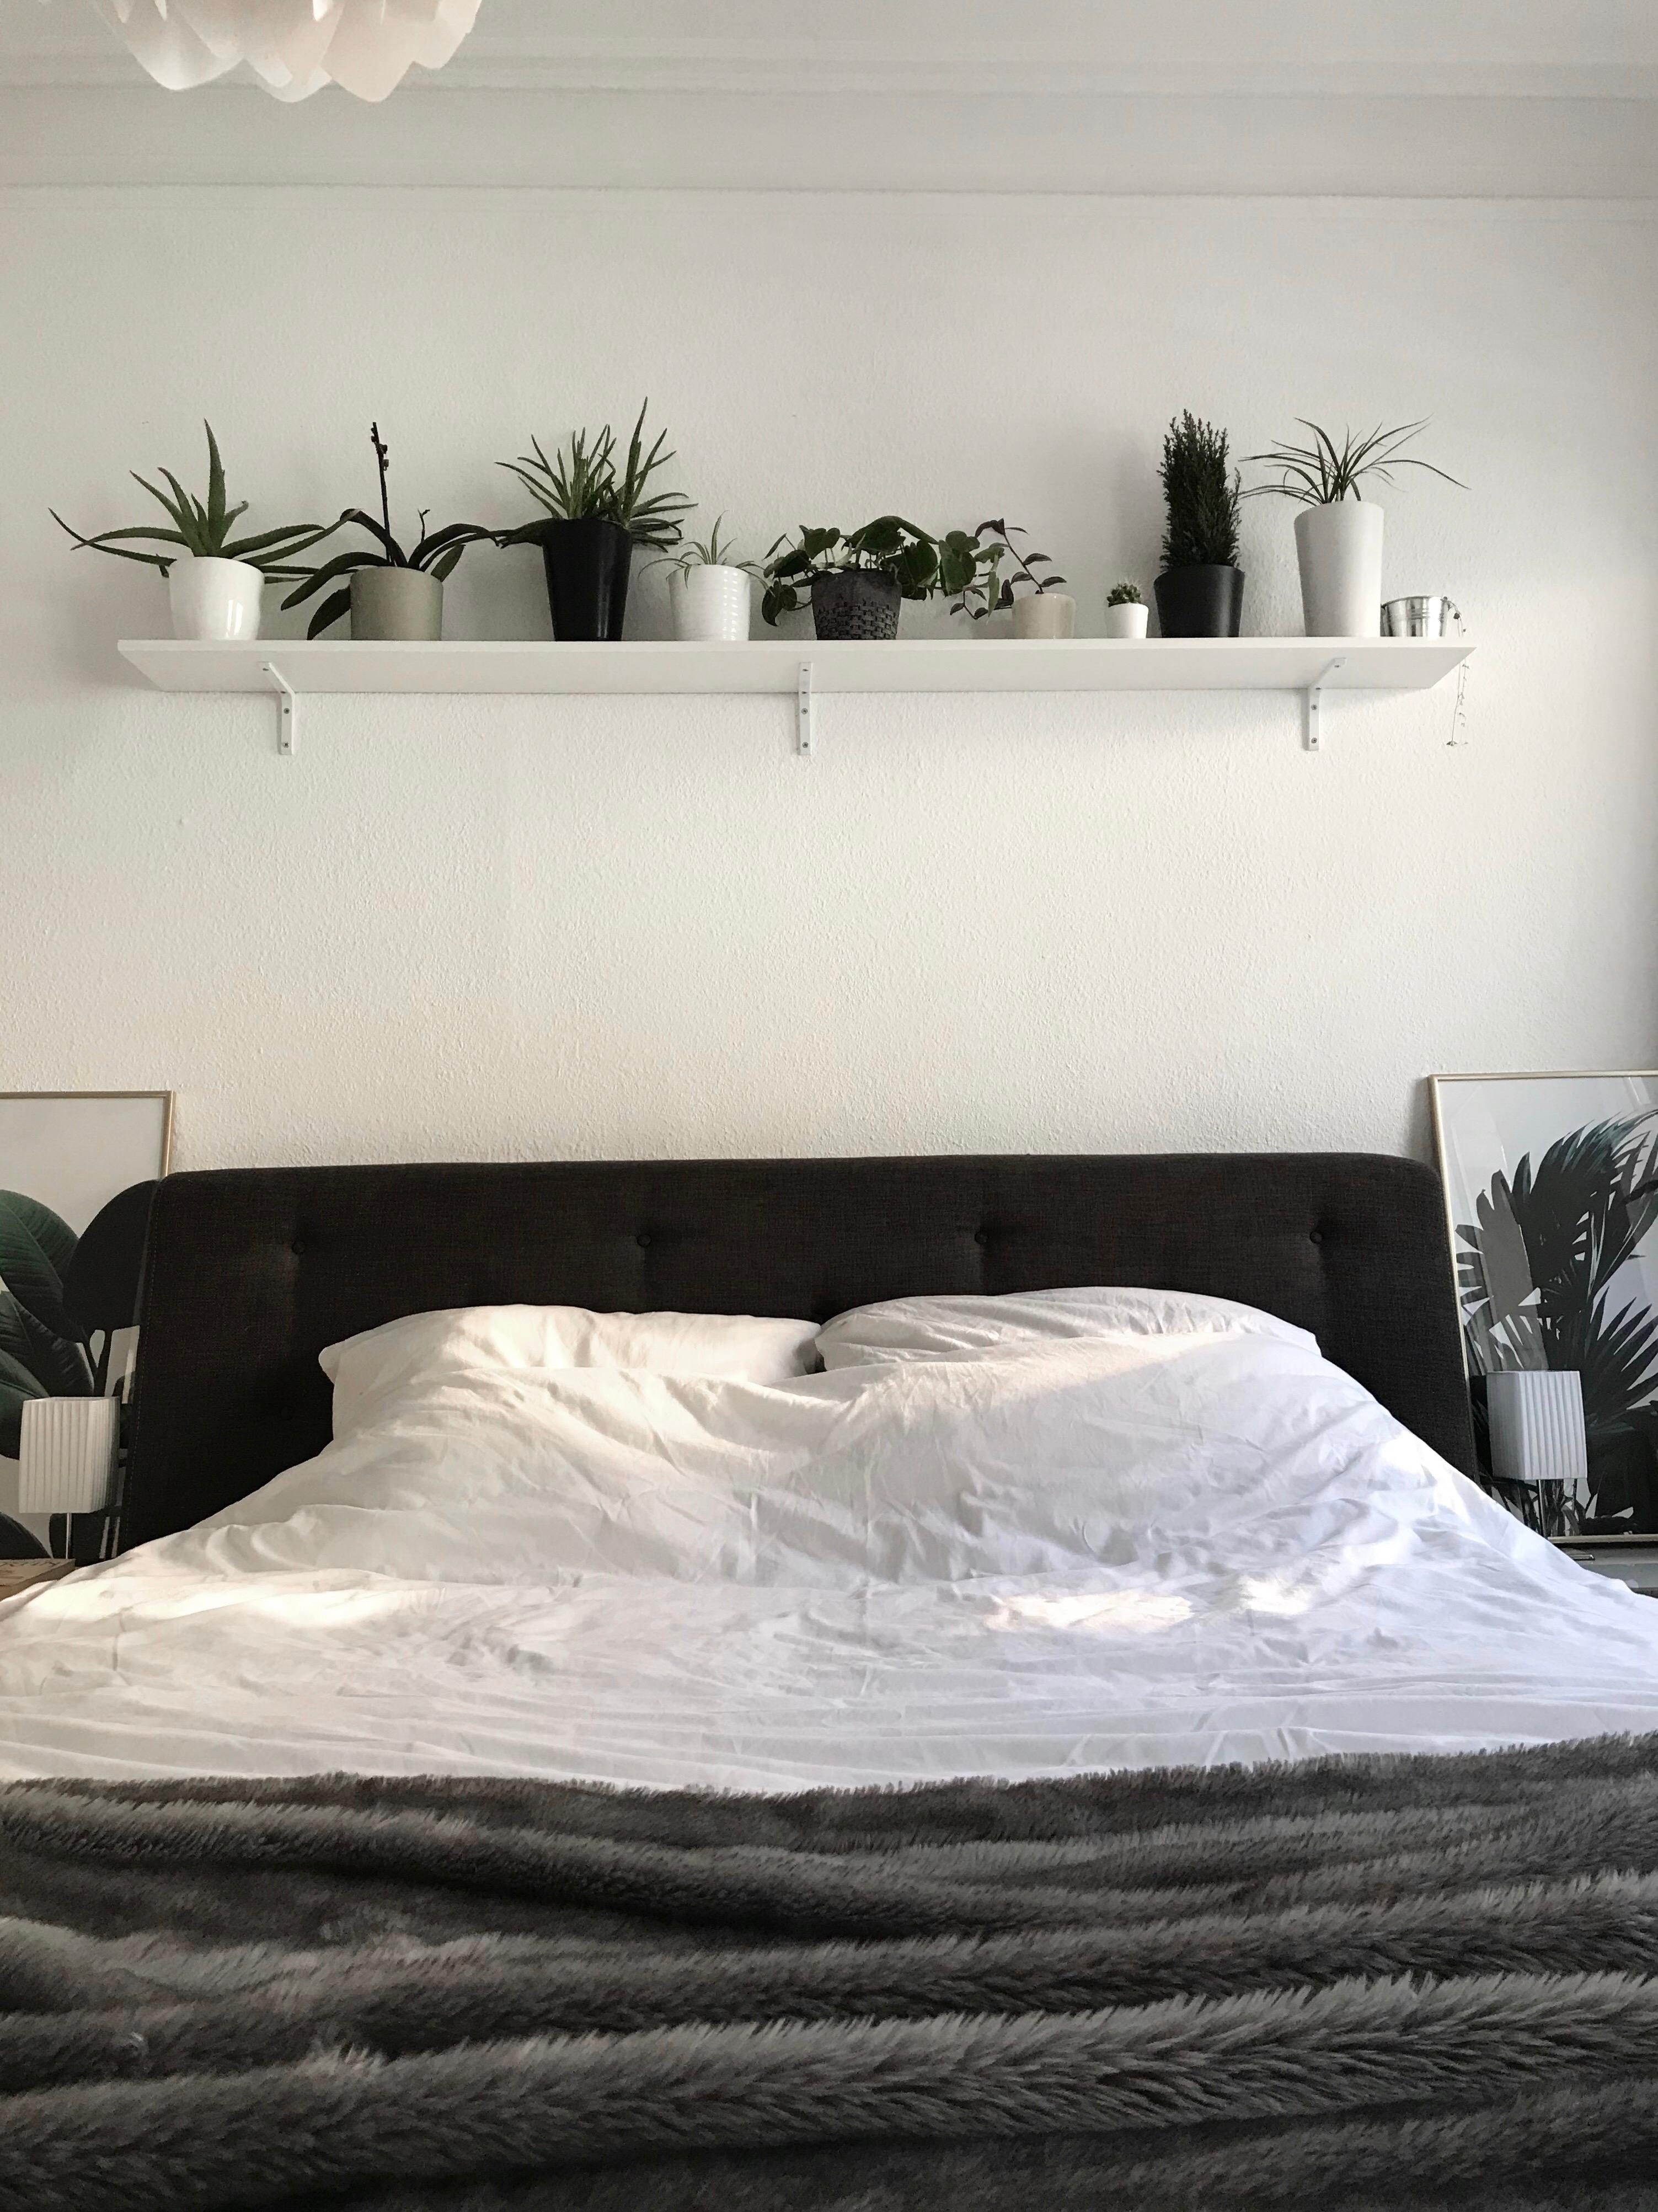 #livingchallenge #plantlover #bedroom #bed #plants #myhome